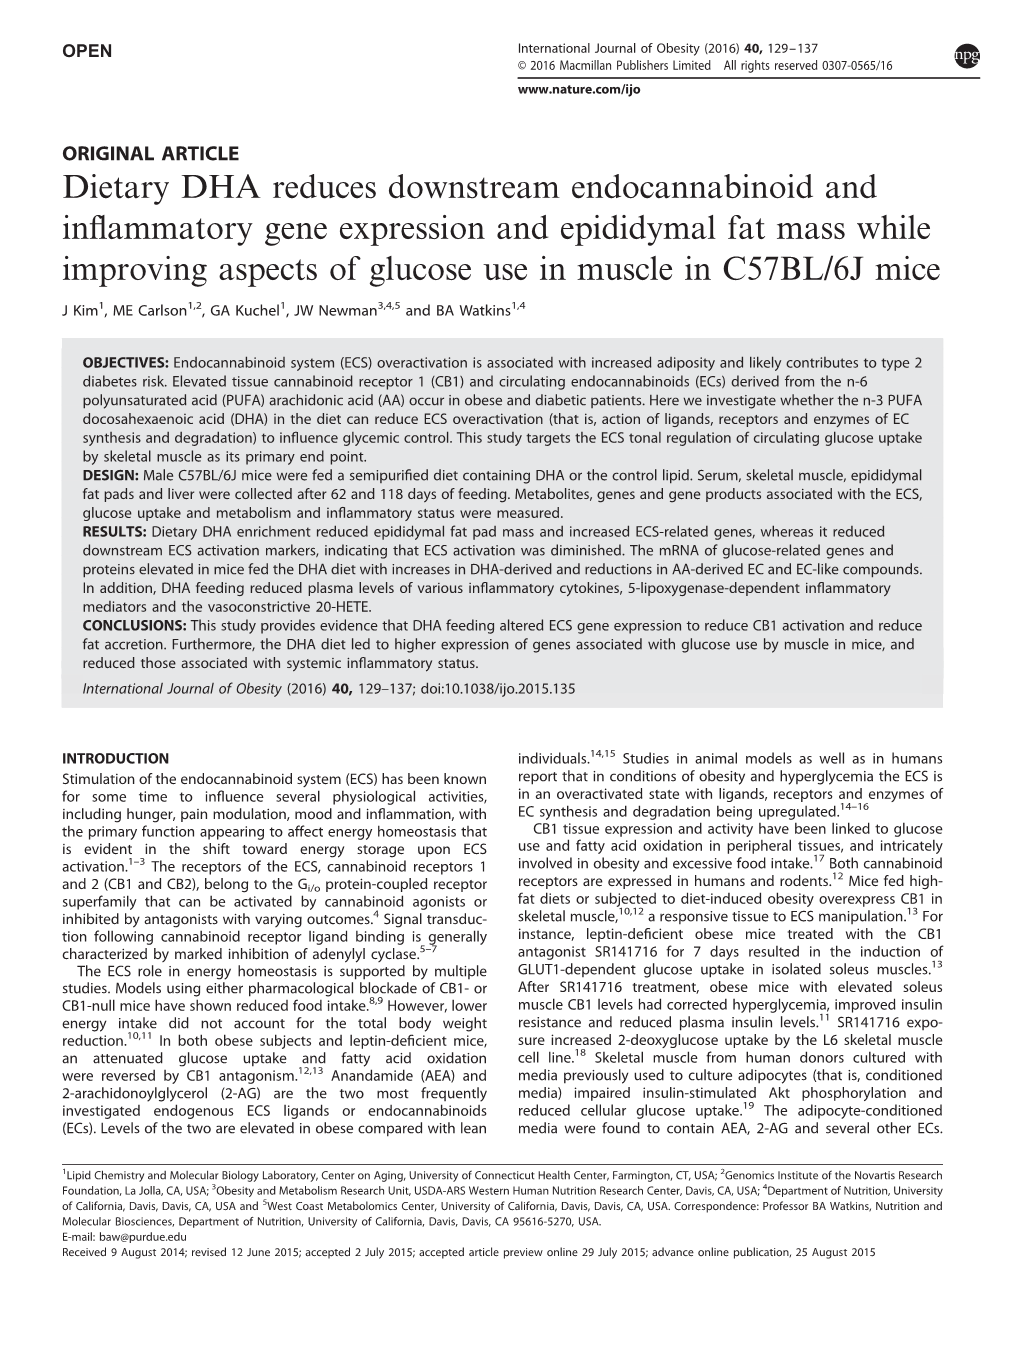 Dietary DHA Reduces Downstream Endocannabinoid and Inflammatory